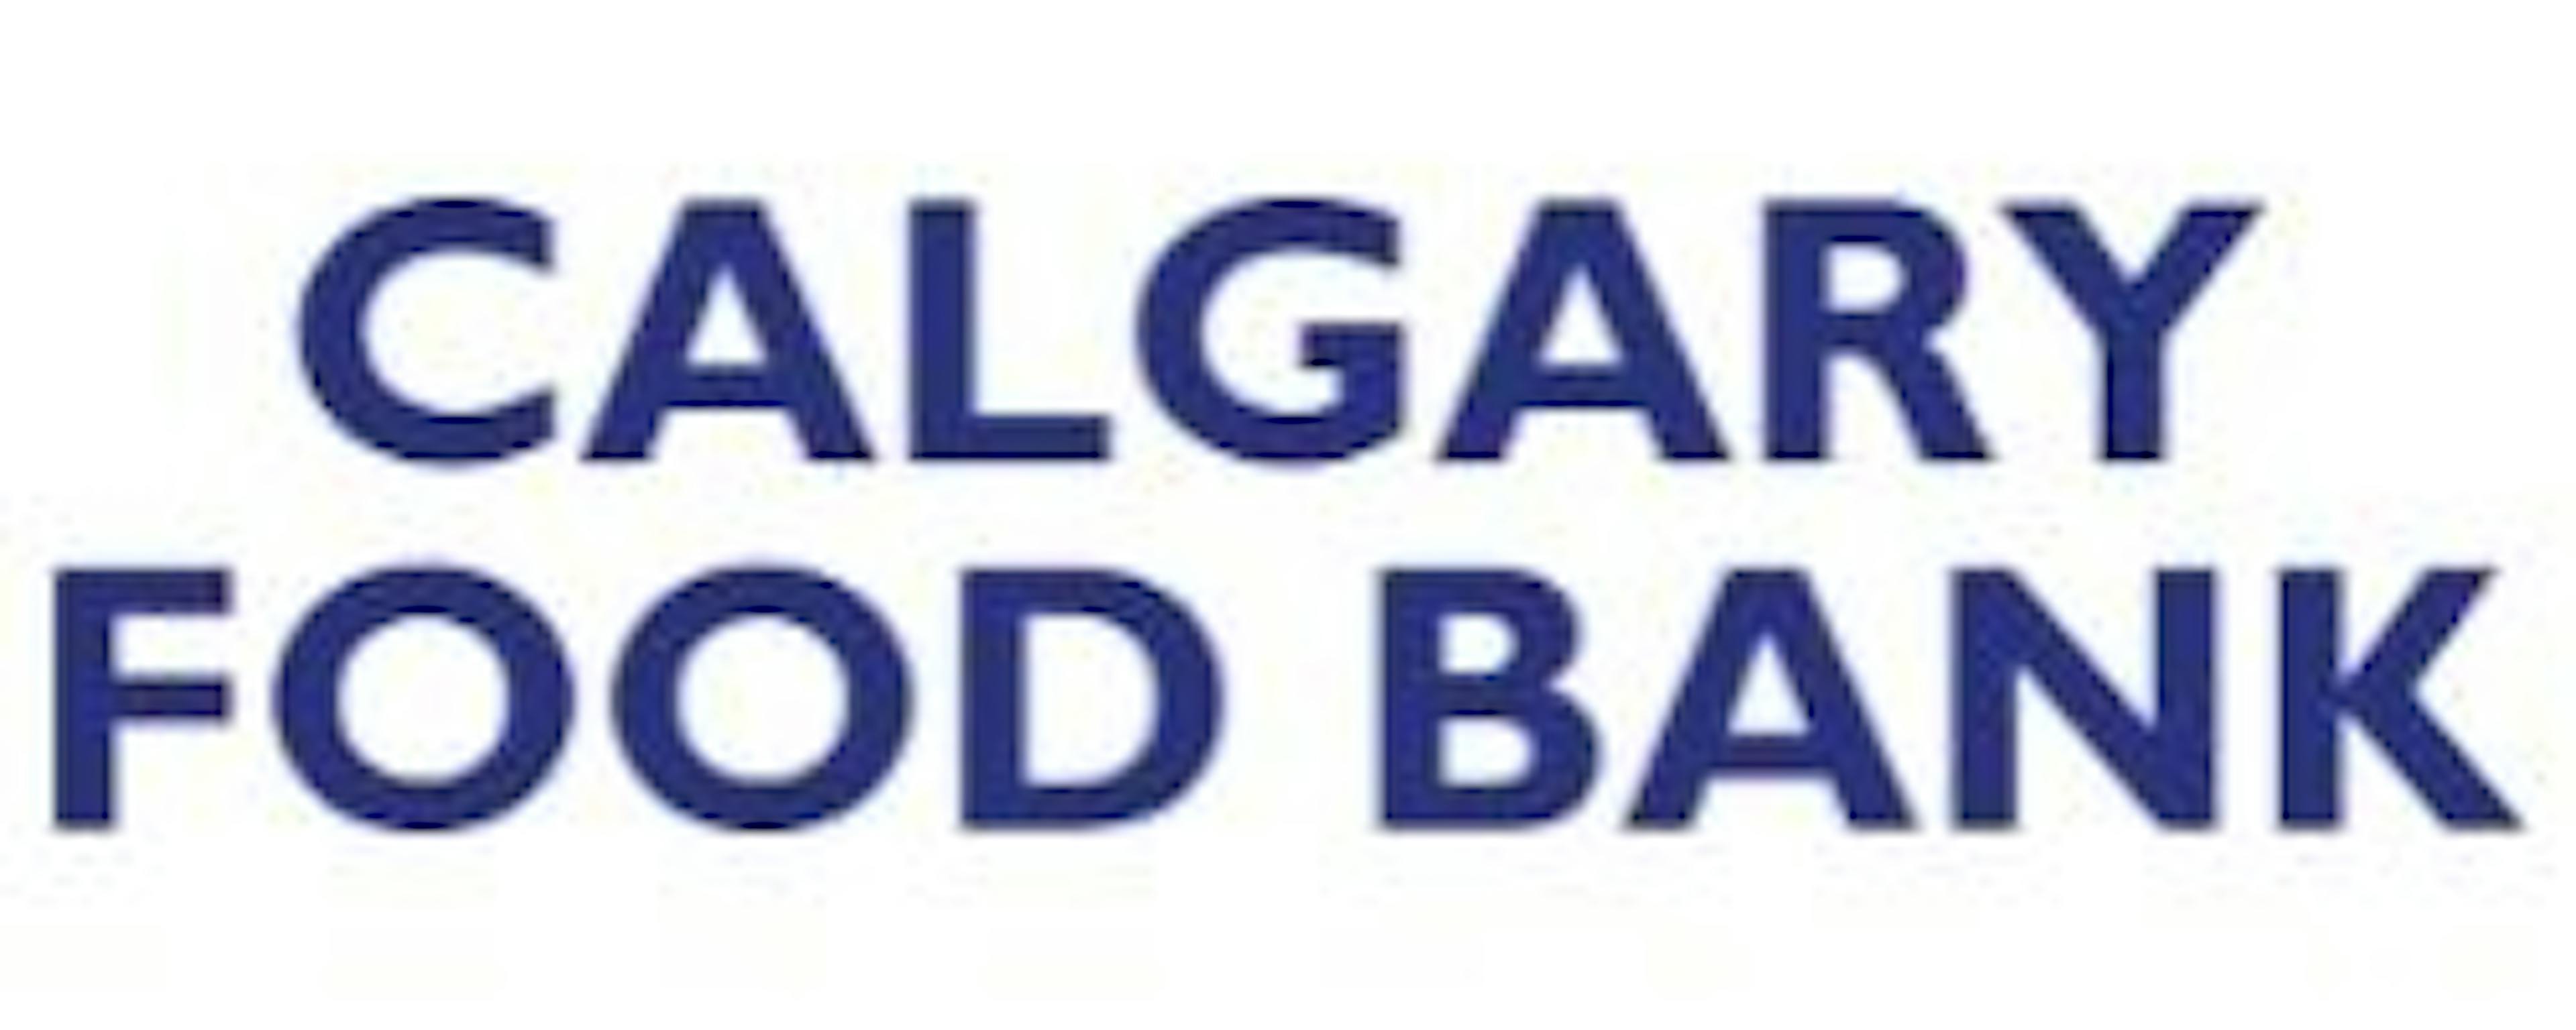 Calgary Food Bank logo